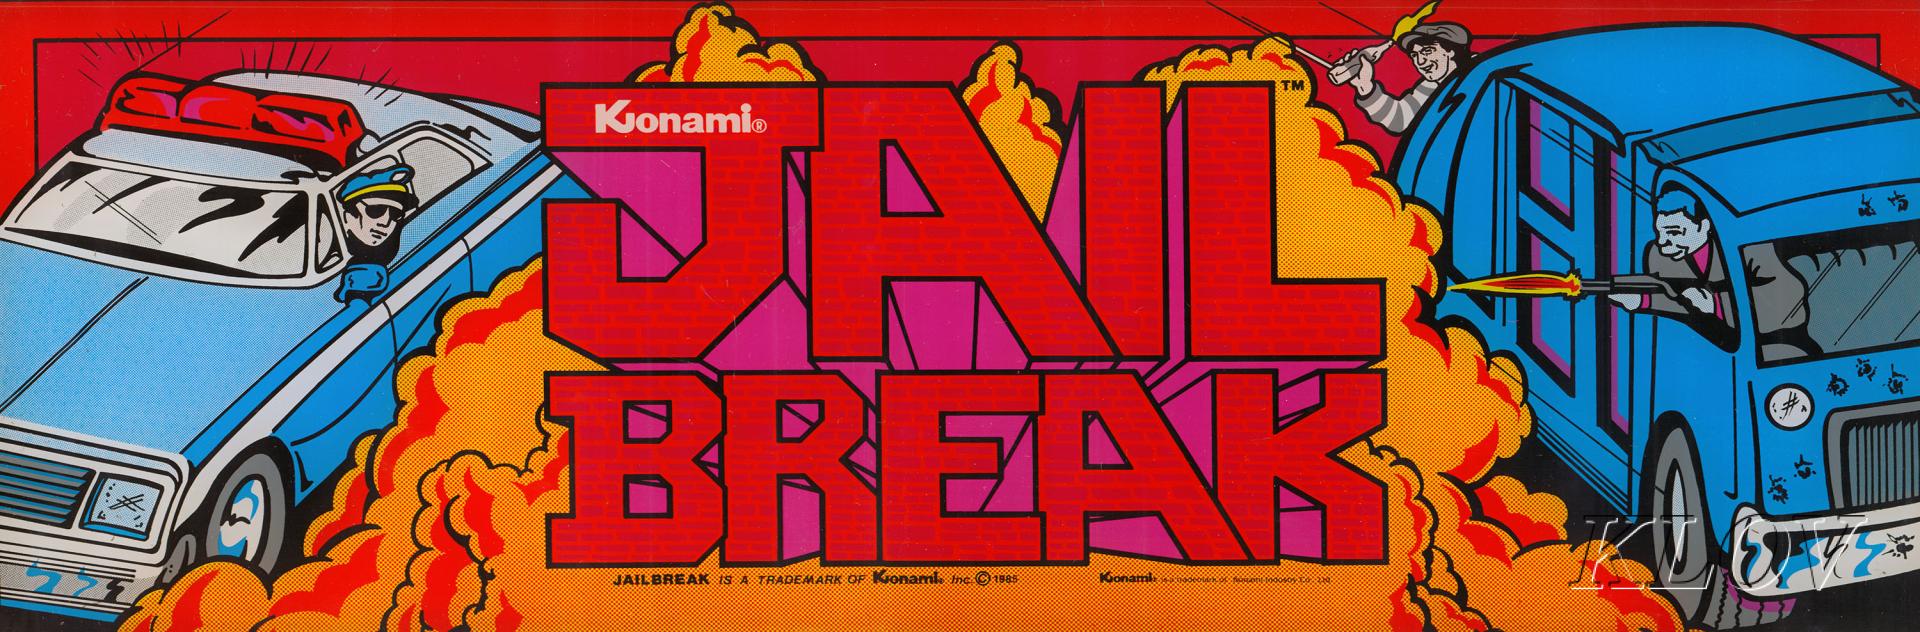 Jail Break - Videogame by Konami